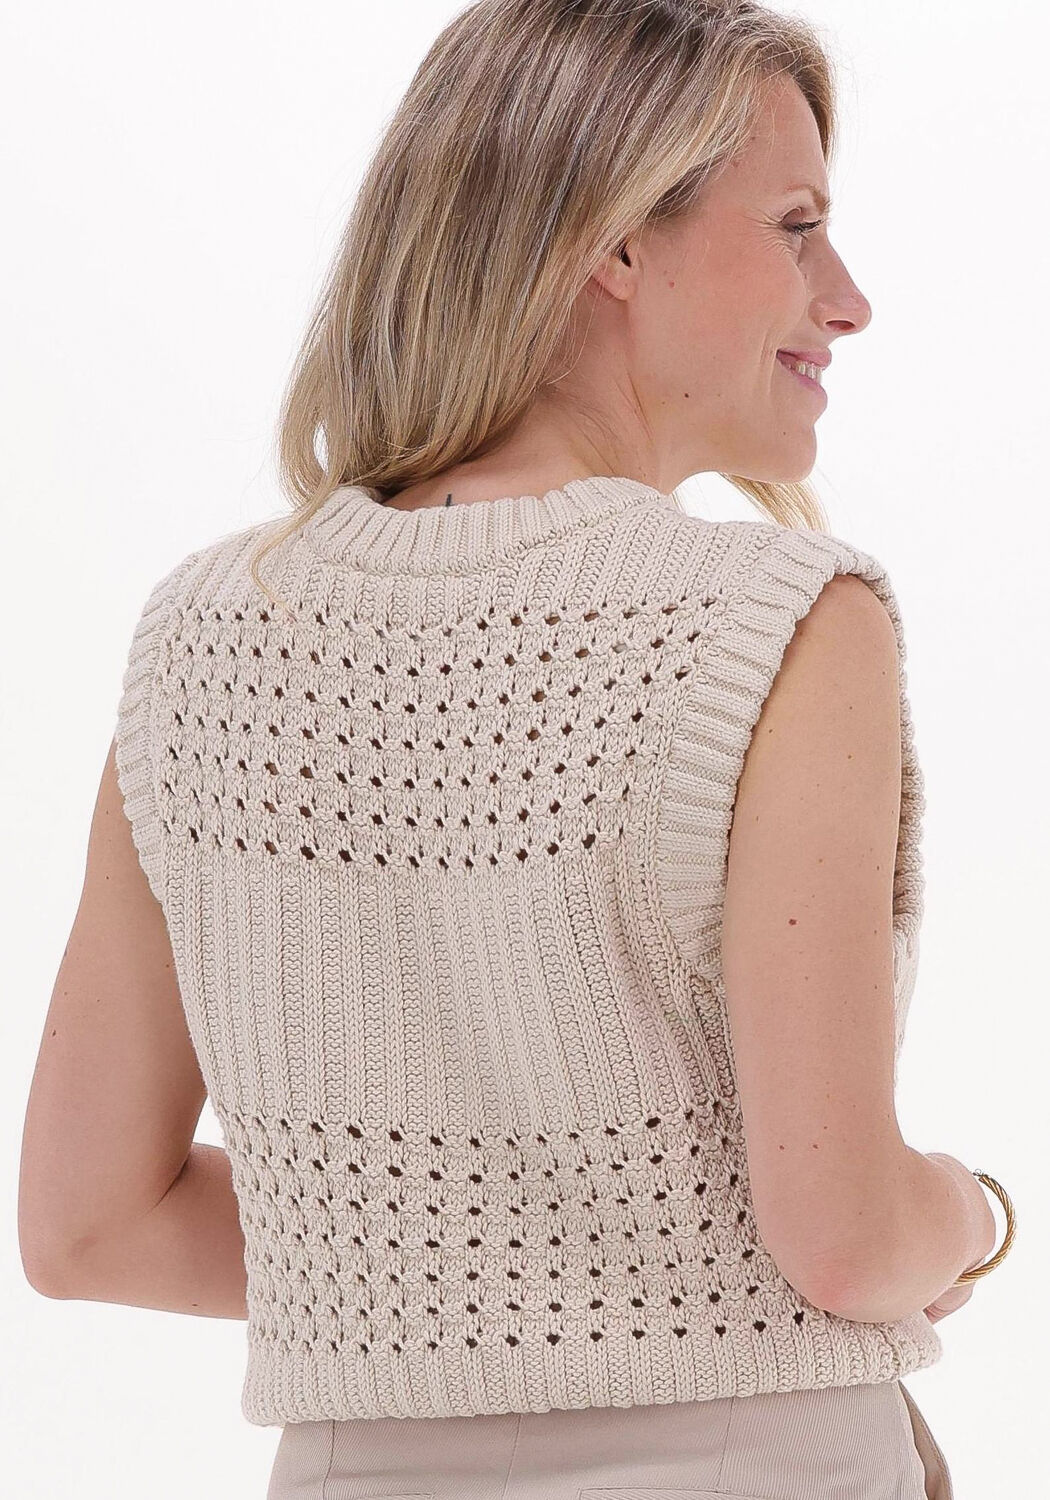 Kleding Dameskleding Sweaters Spencers Hand Knit Lace Tunic/Vest 